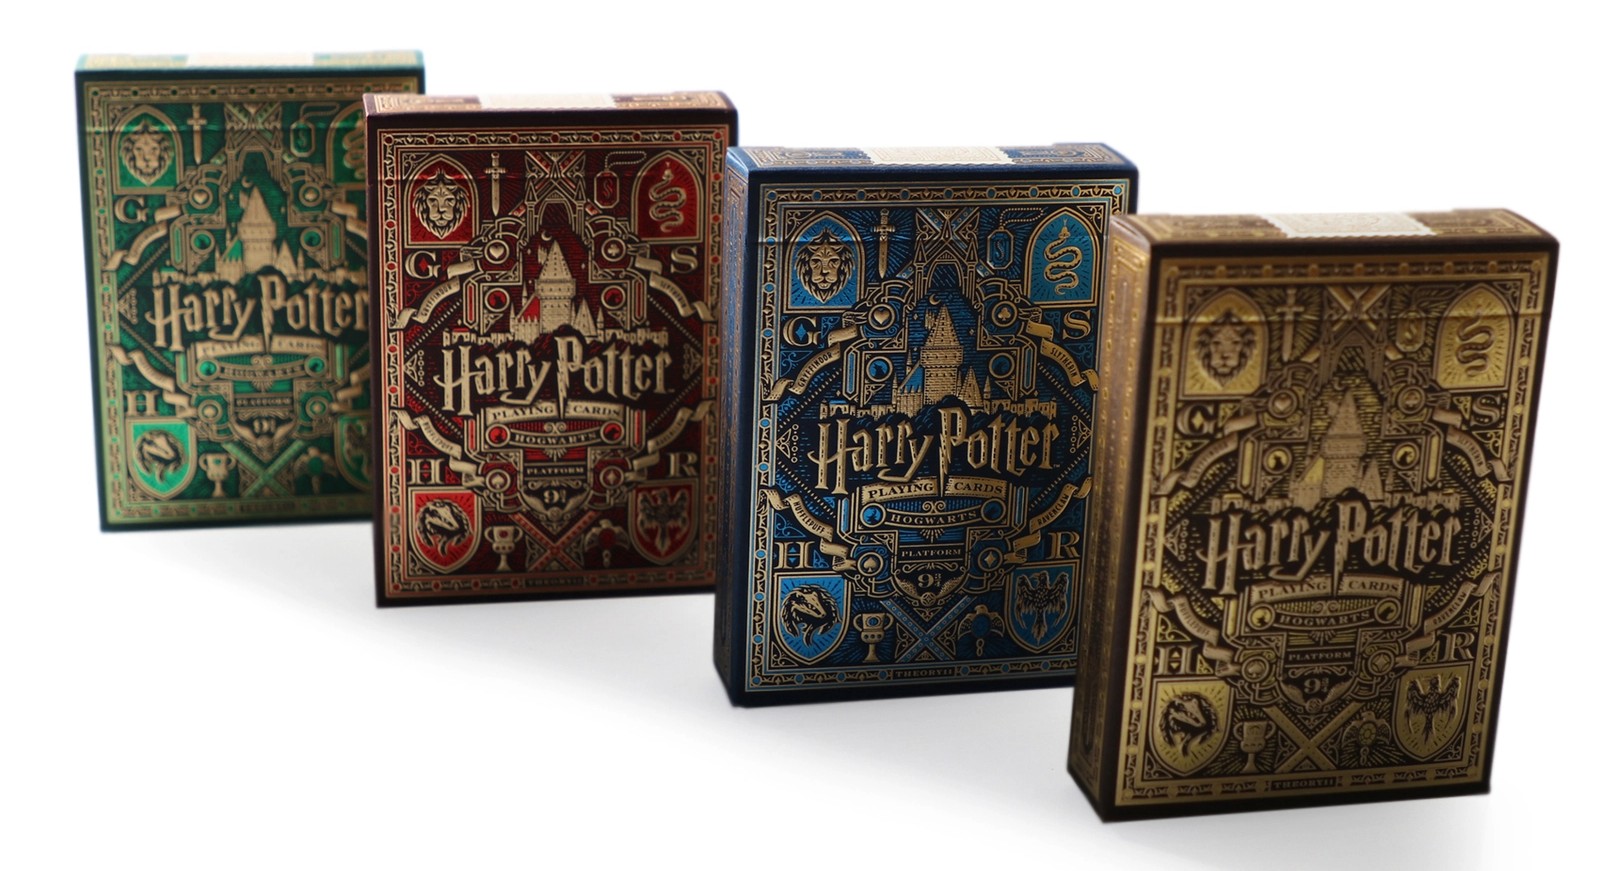 Harry Potter: Serdaigle - Cartes à Jouer Theory 11 - LilloJEUX